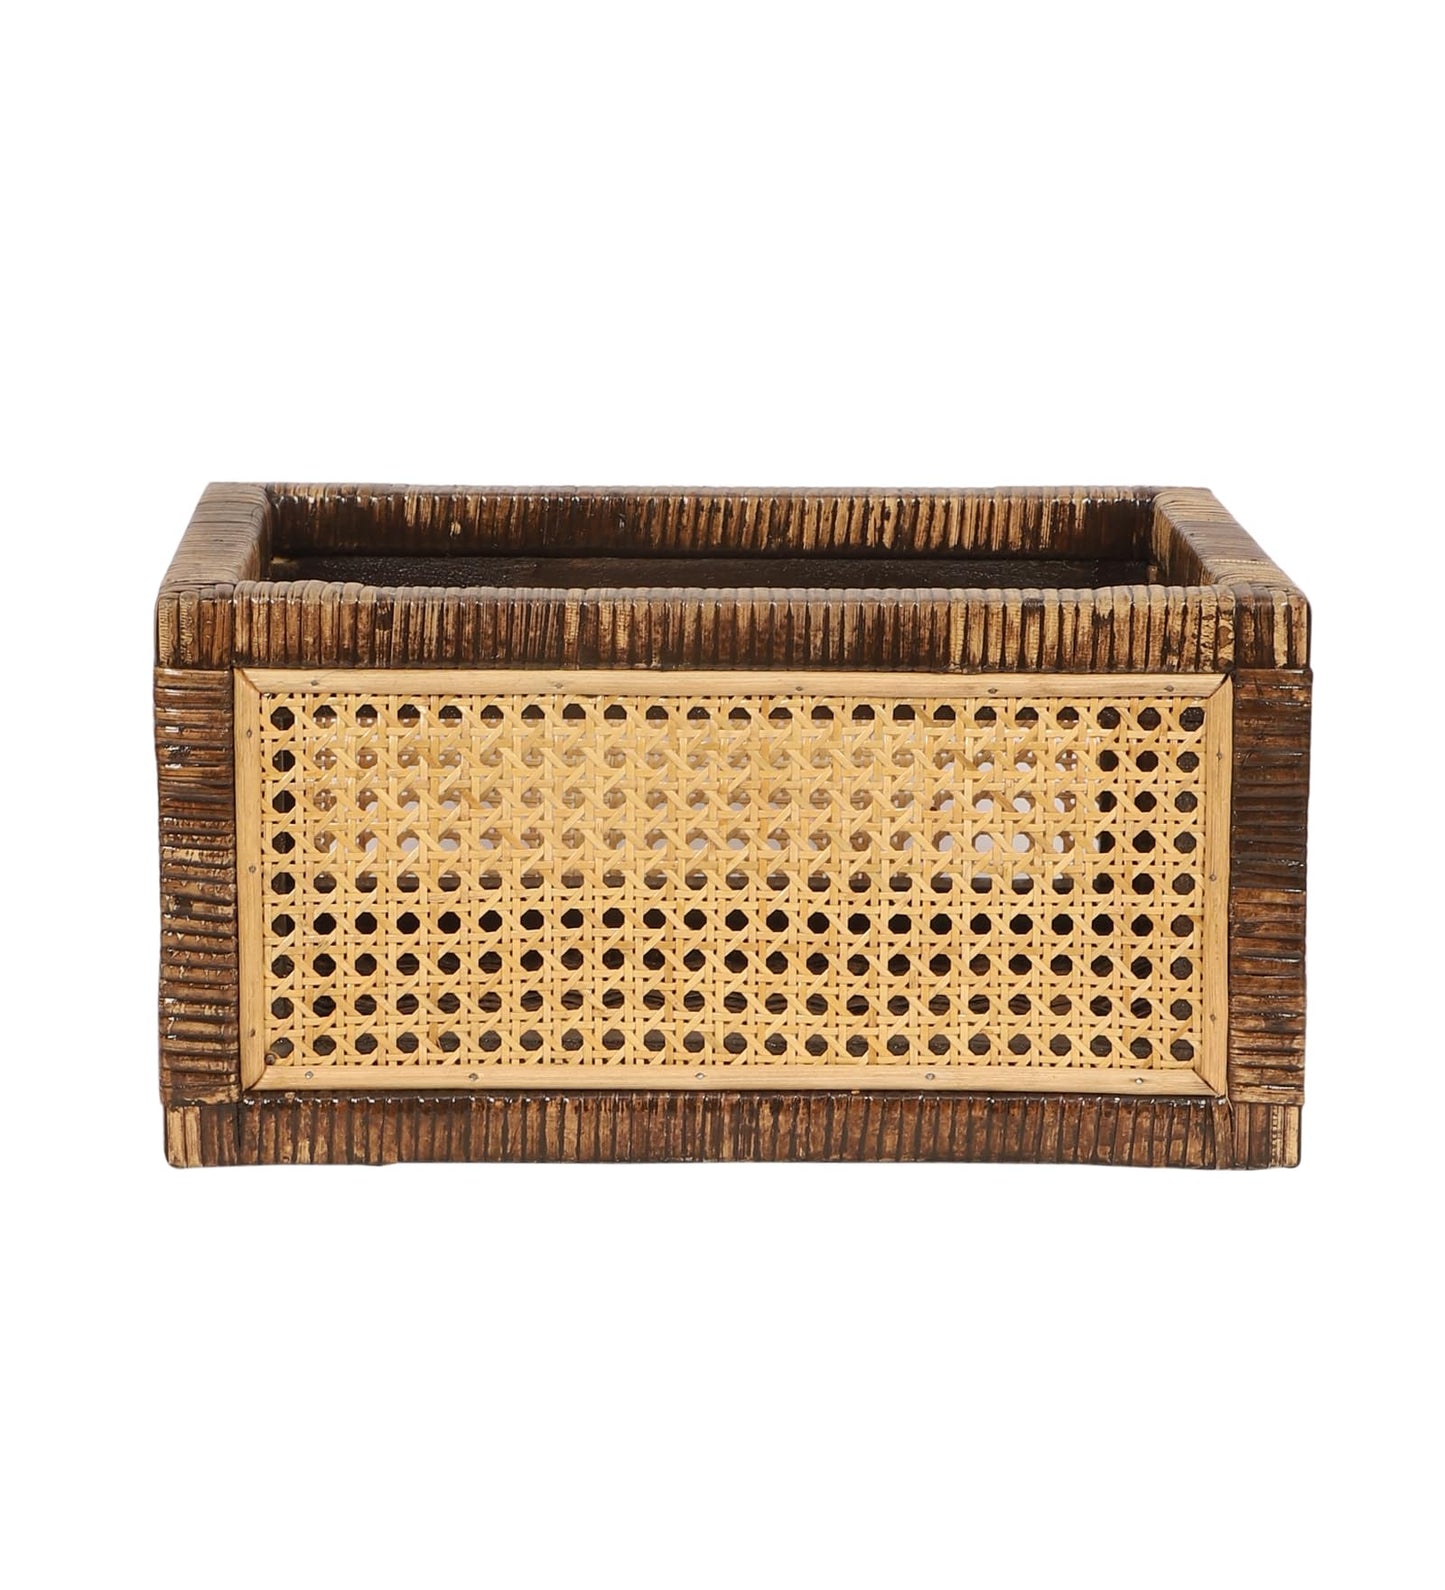 Akway Rattan cane webbing Storage basket | Wicker basket for storage organizer | Kauna Grass storage basket For Home | Kitchn Living Room - (Small, Dark Brown) - Akway